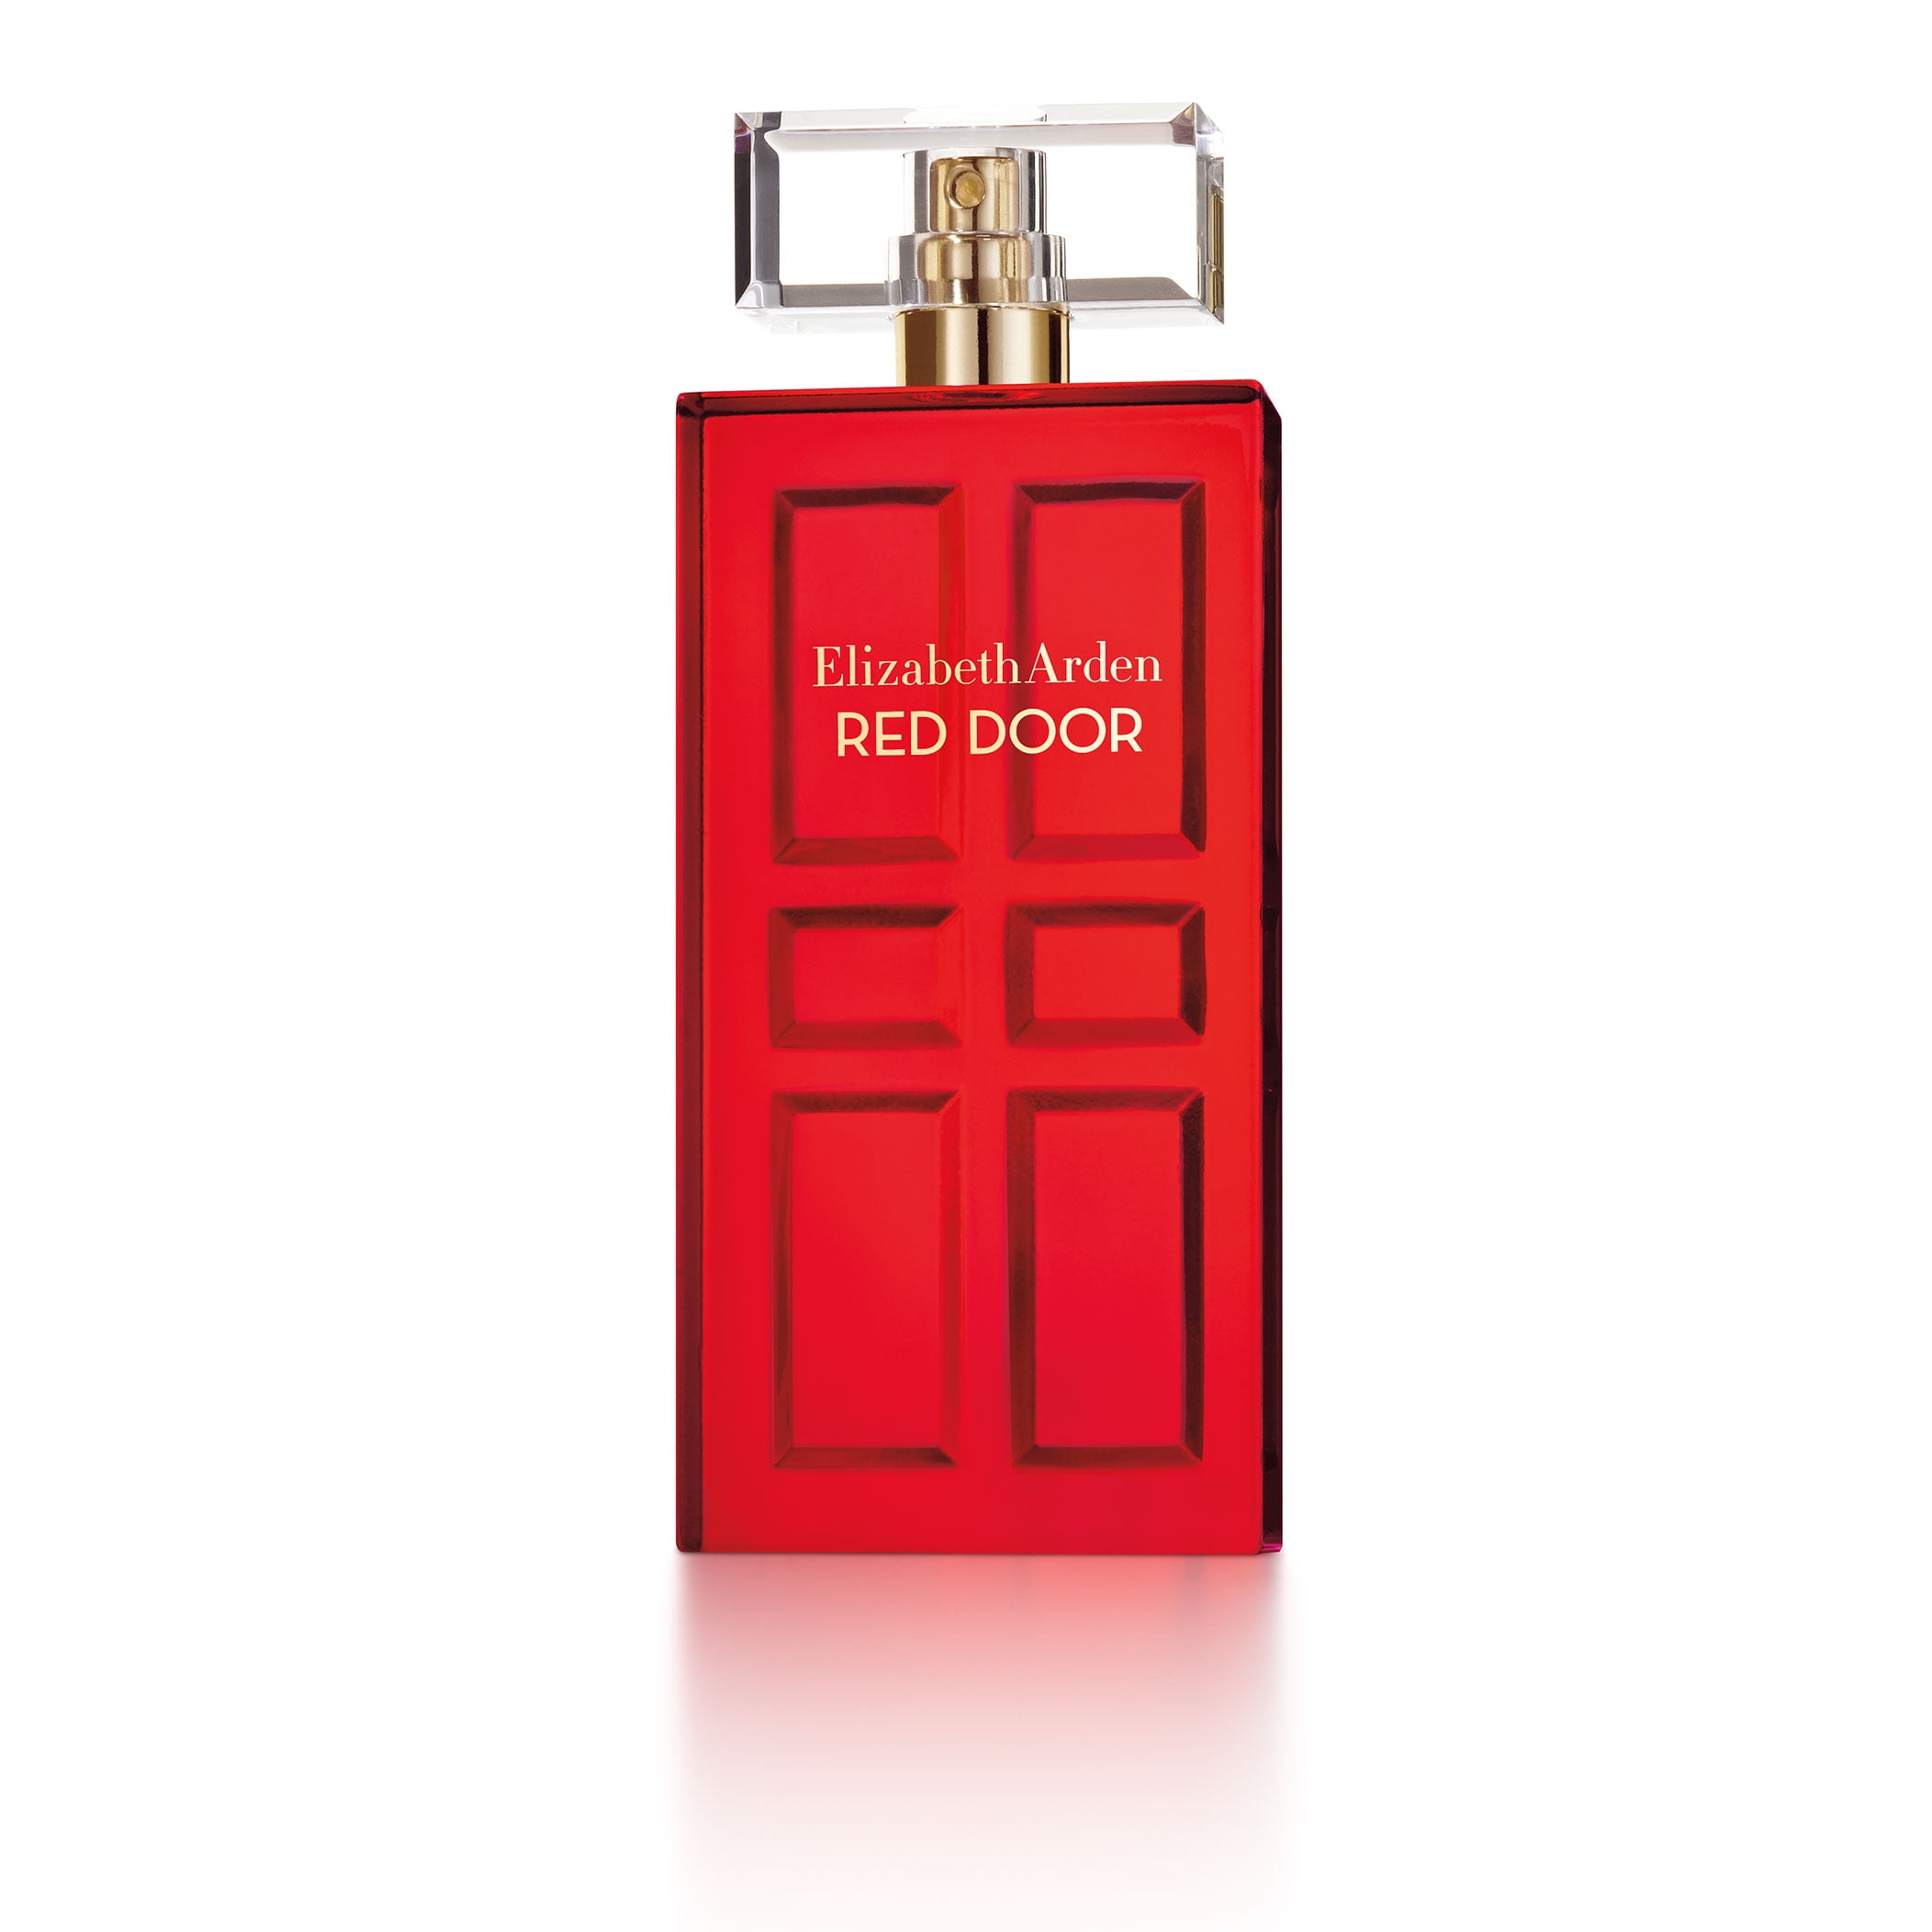 Elizabeth Arden Elizabeth Arden Red Door Eau De Toilette Spray Natural, Perfume for Women, 3.3 fl. oz, 3.3 fl oz